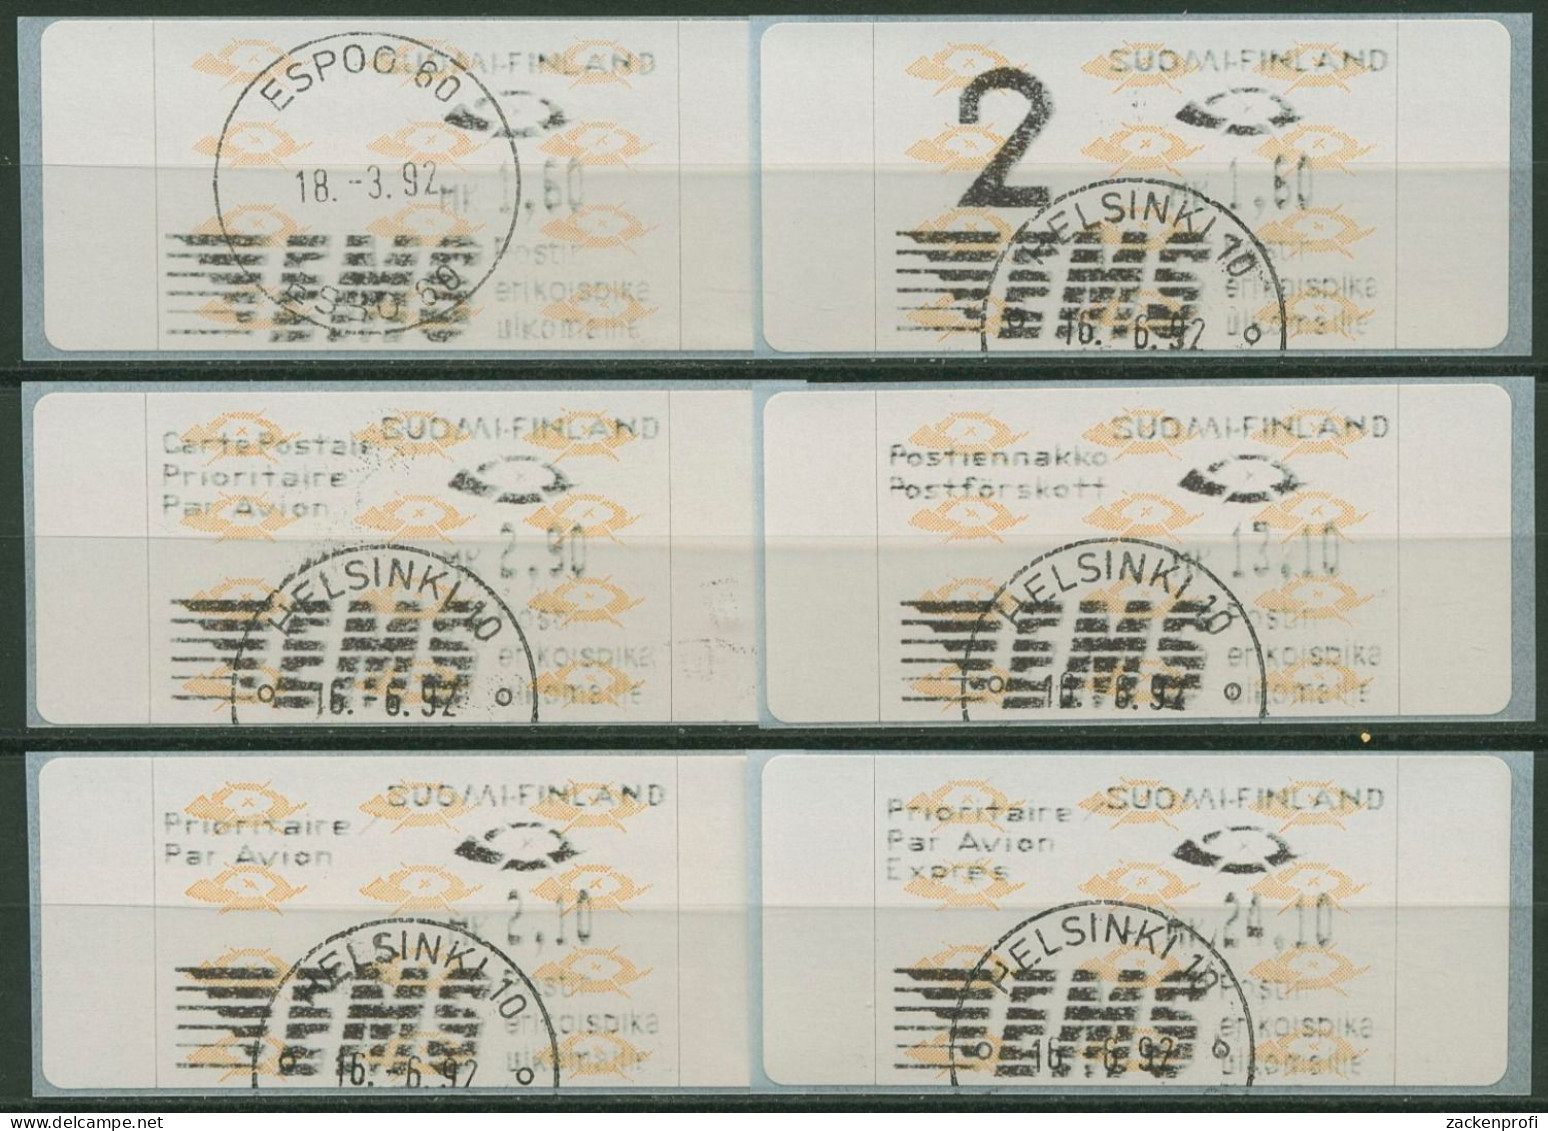 Finnland ATM 1992 Posthörner Zudrucksatz ATM 12.1 ZS 1 Gestempelt - Machine Labels [ATM]